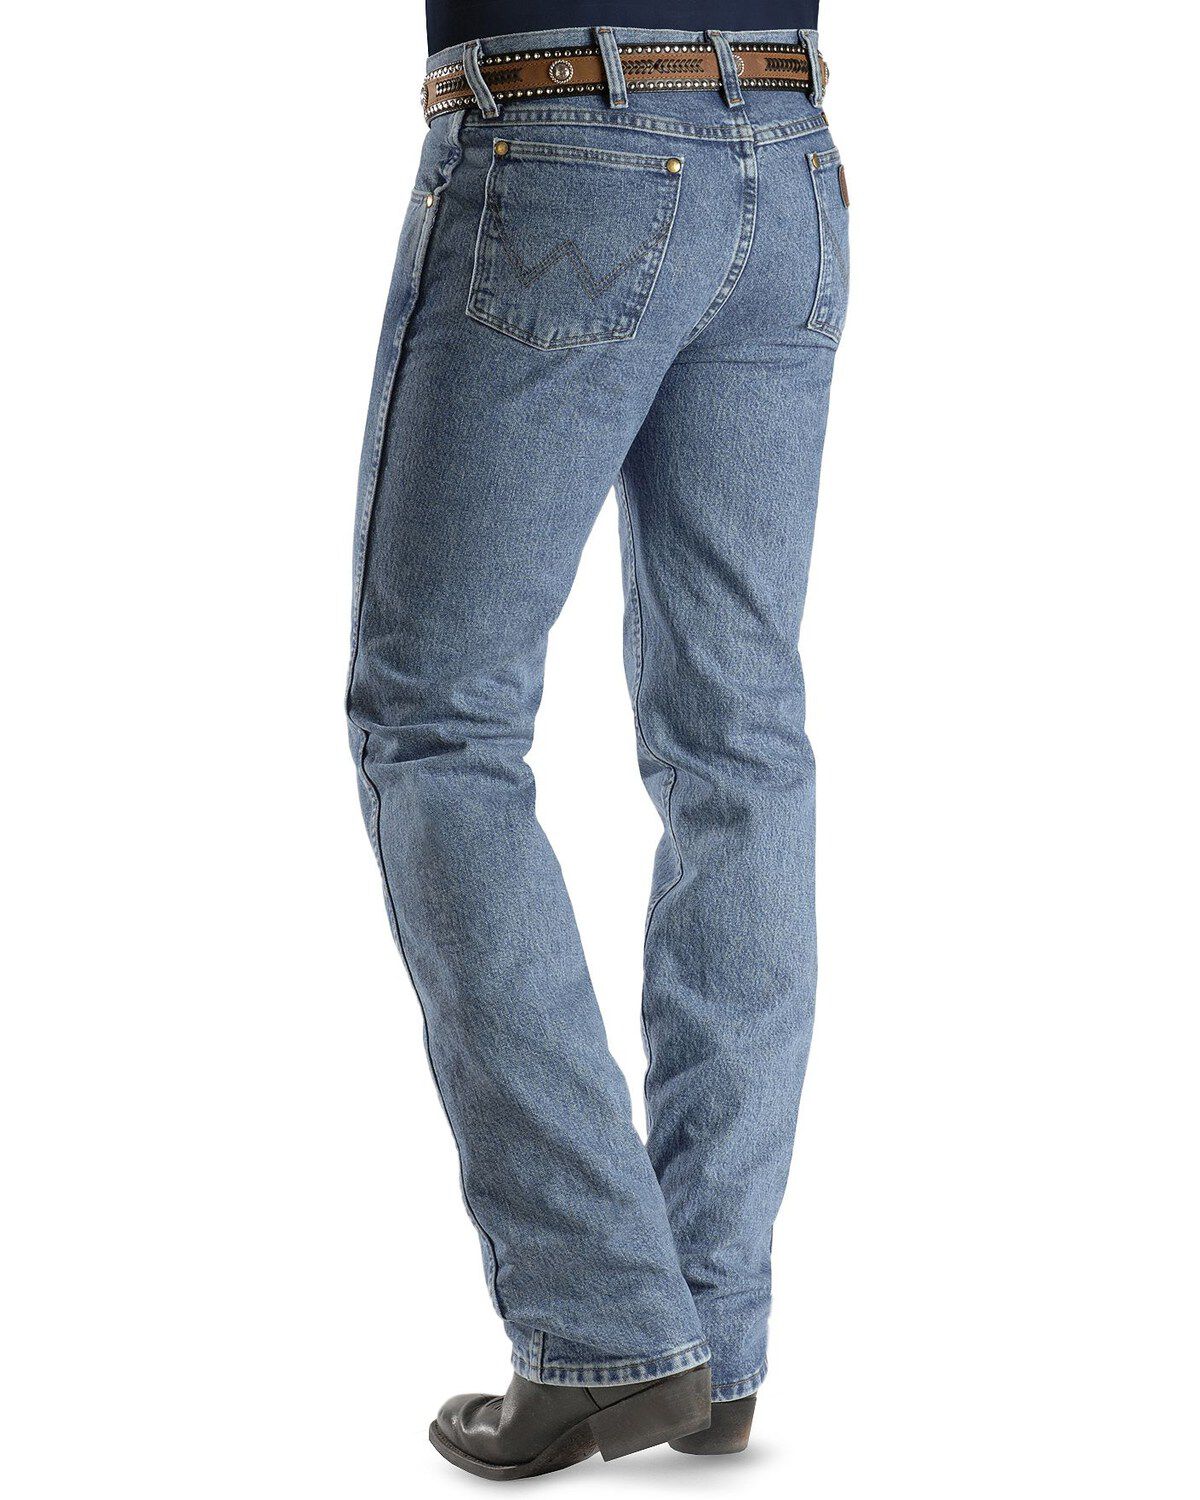 Wrangler Jeans - Cowboy Cut 36MWZ Slim 